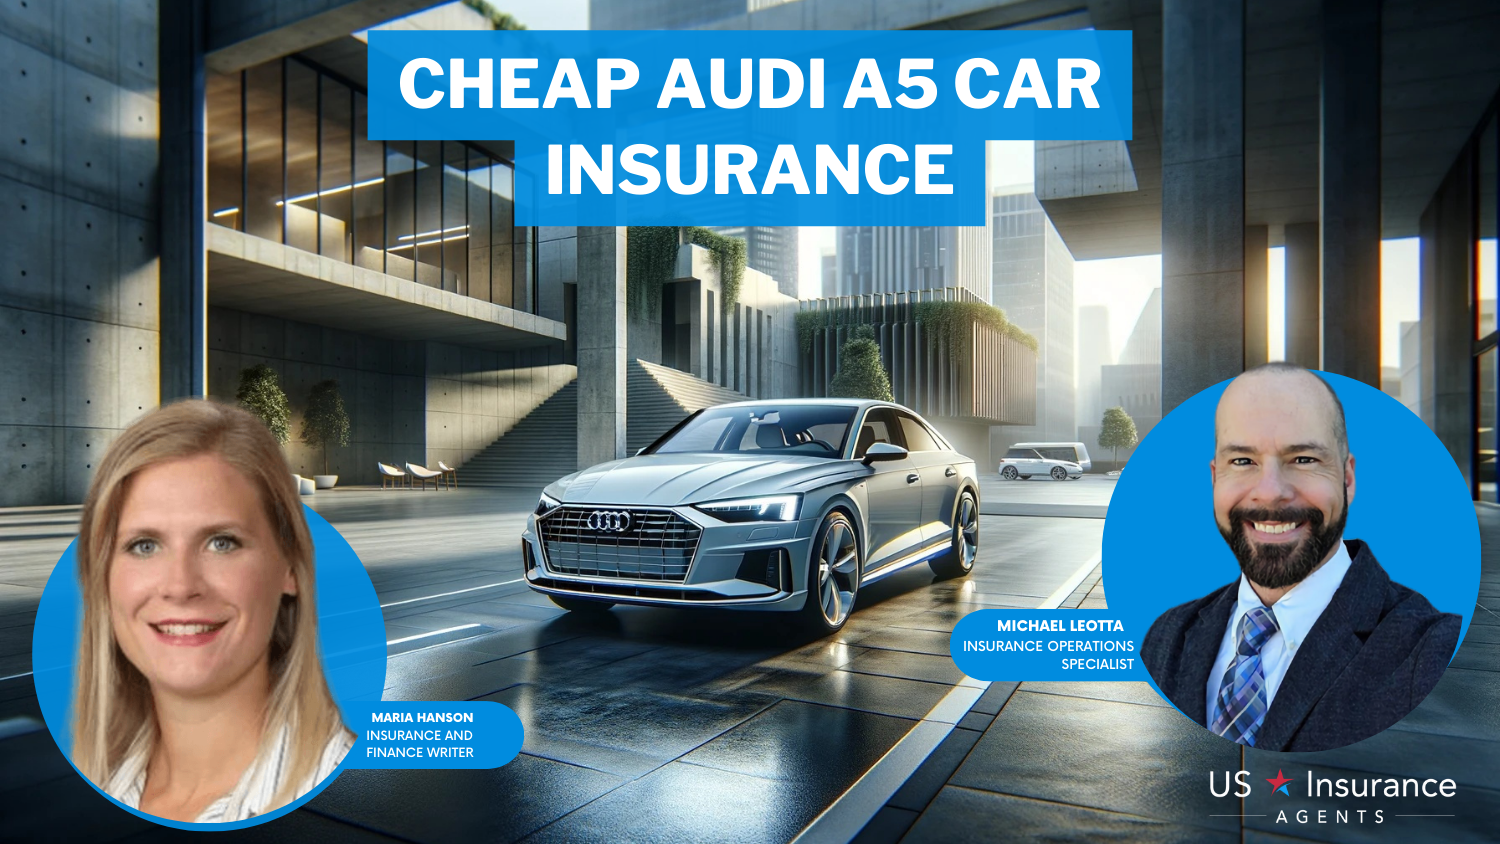 Cheap Audi A5 Car Insurance: State Farm, USAA, Nationwide